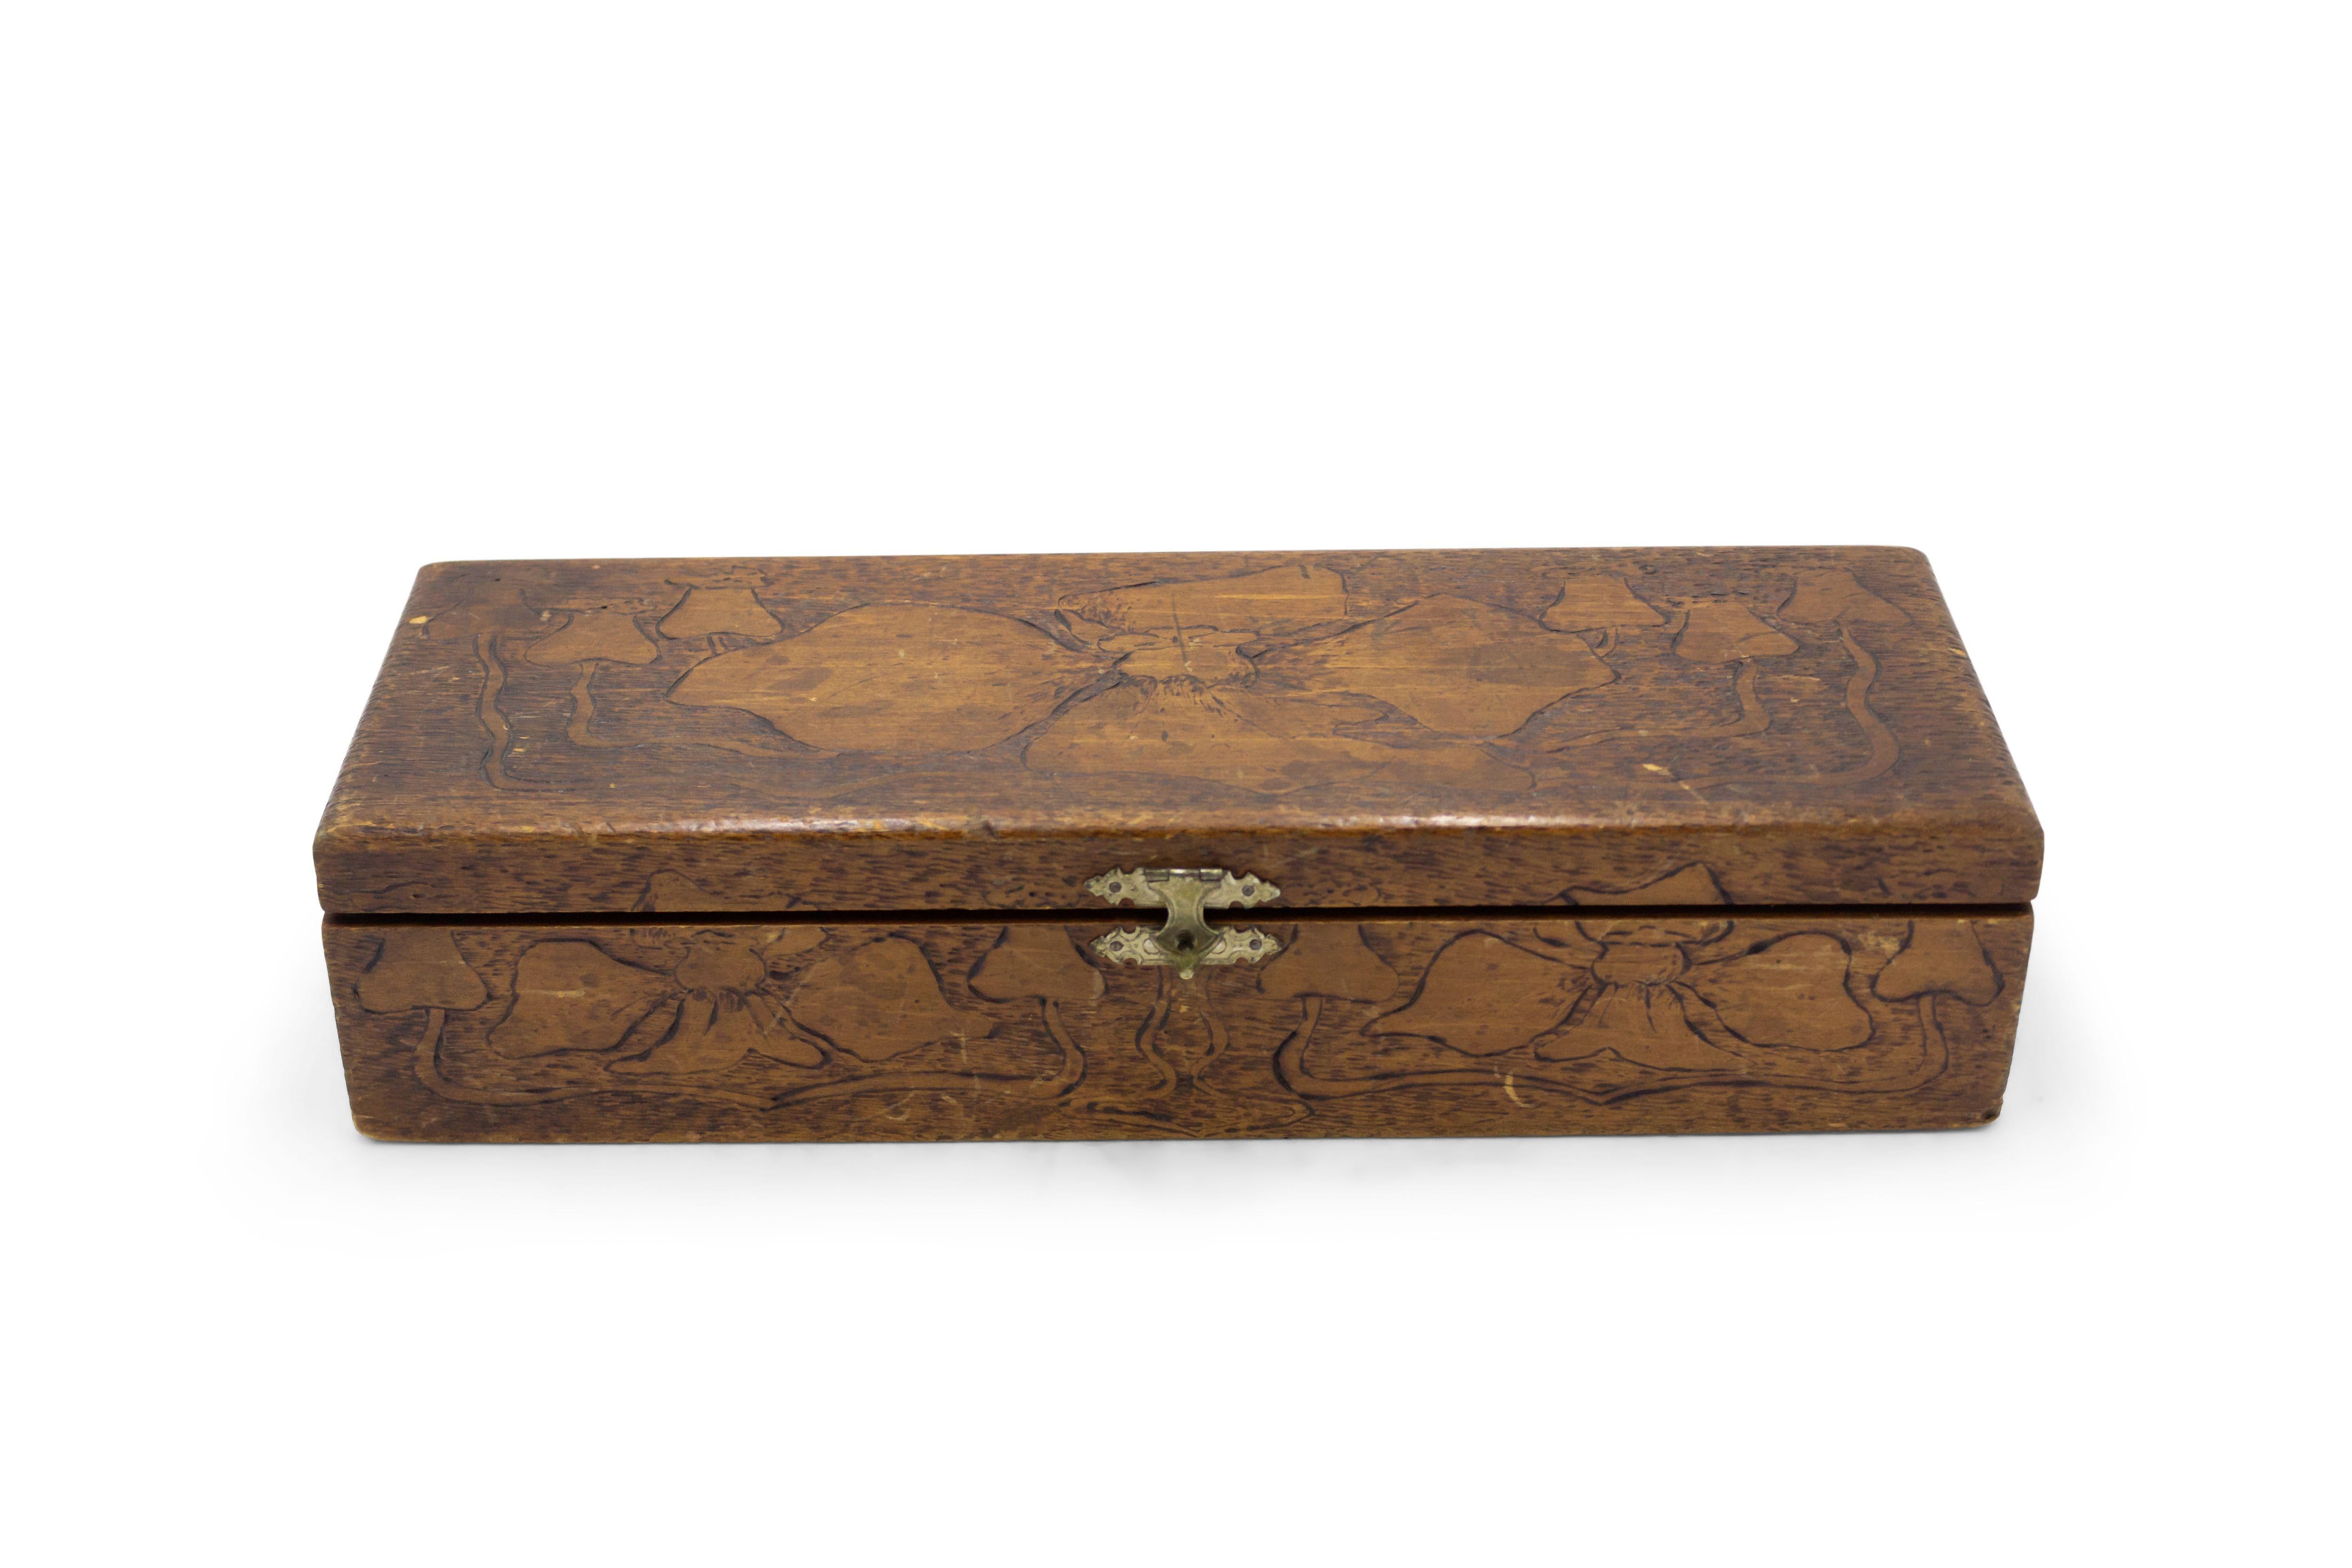 Etched Art Nouveau Carved Wooden Box For Sale